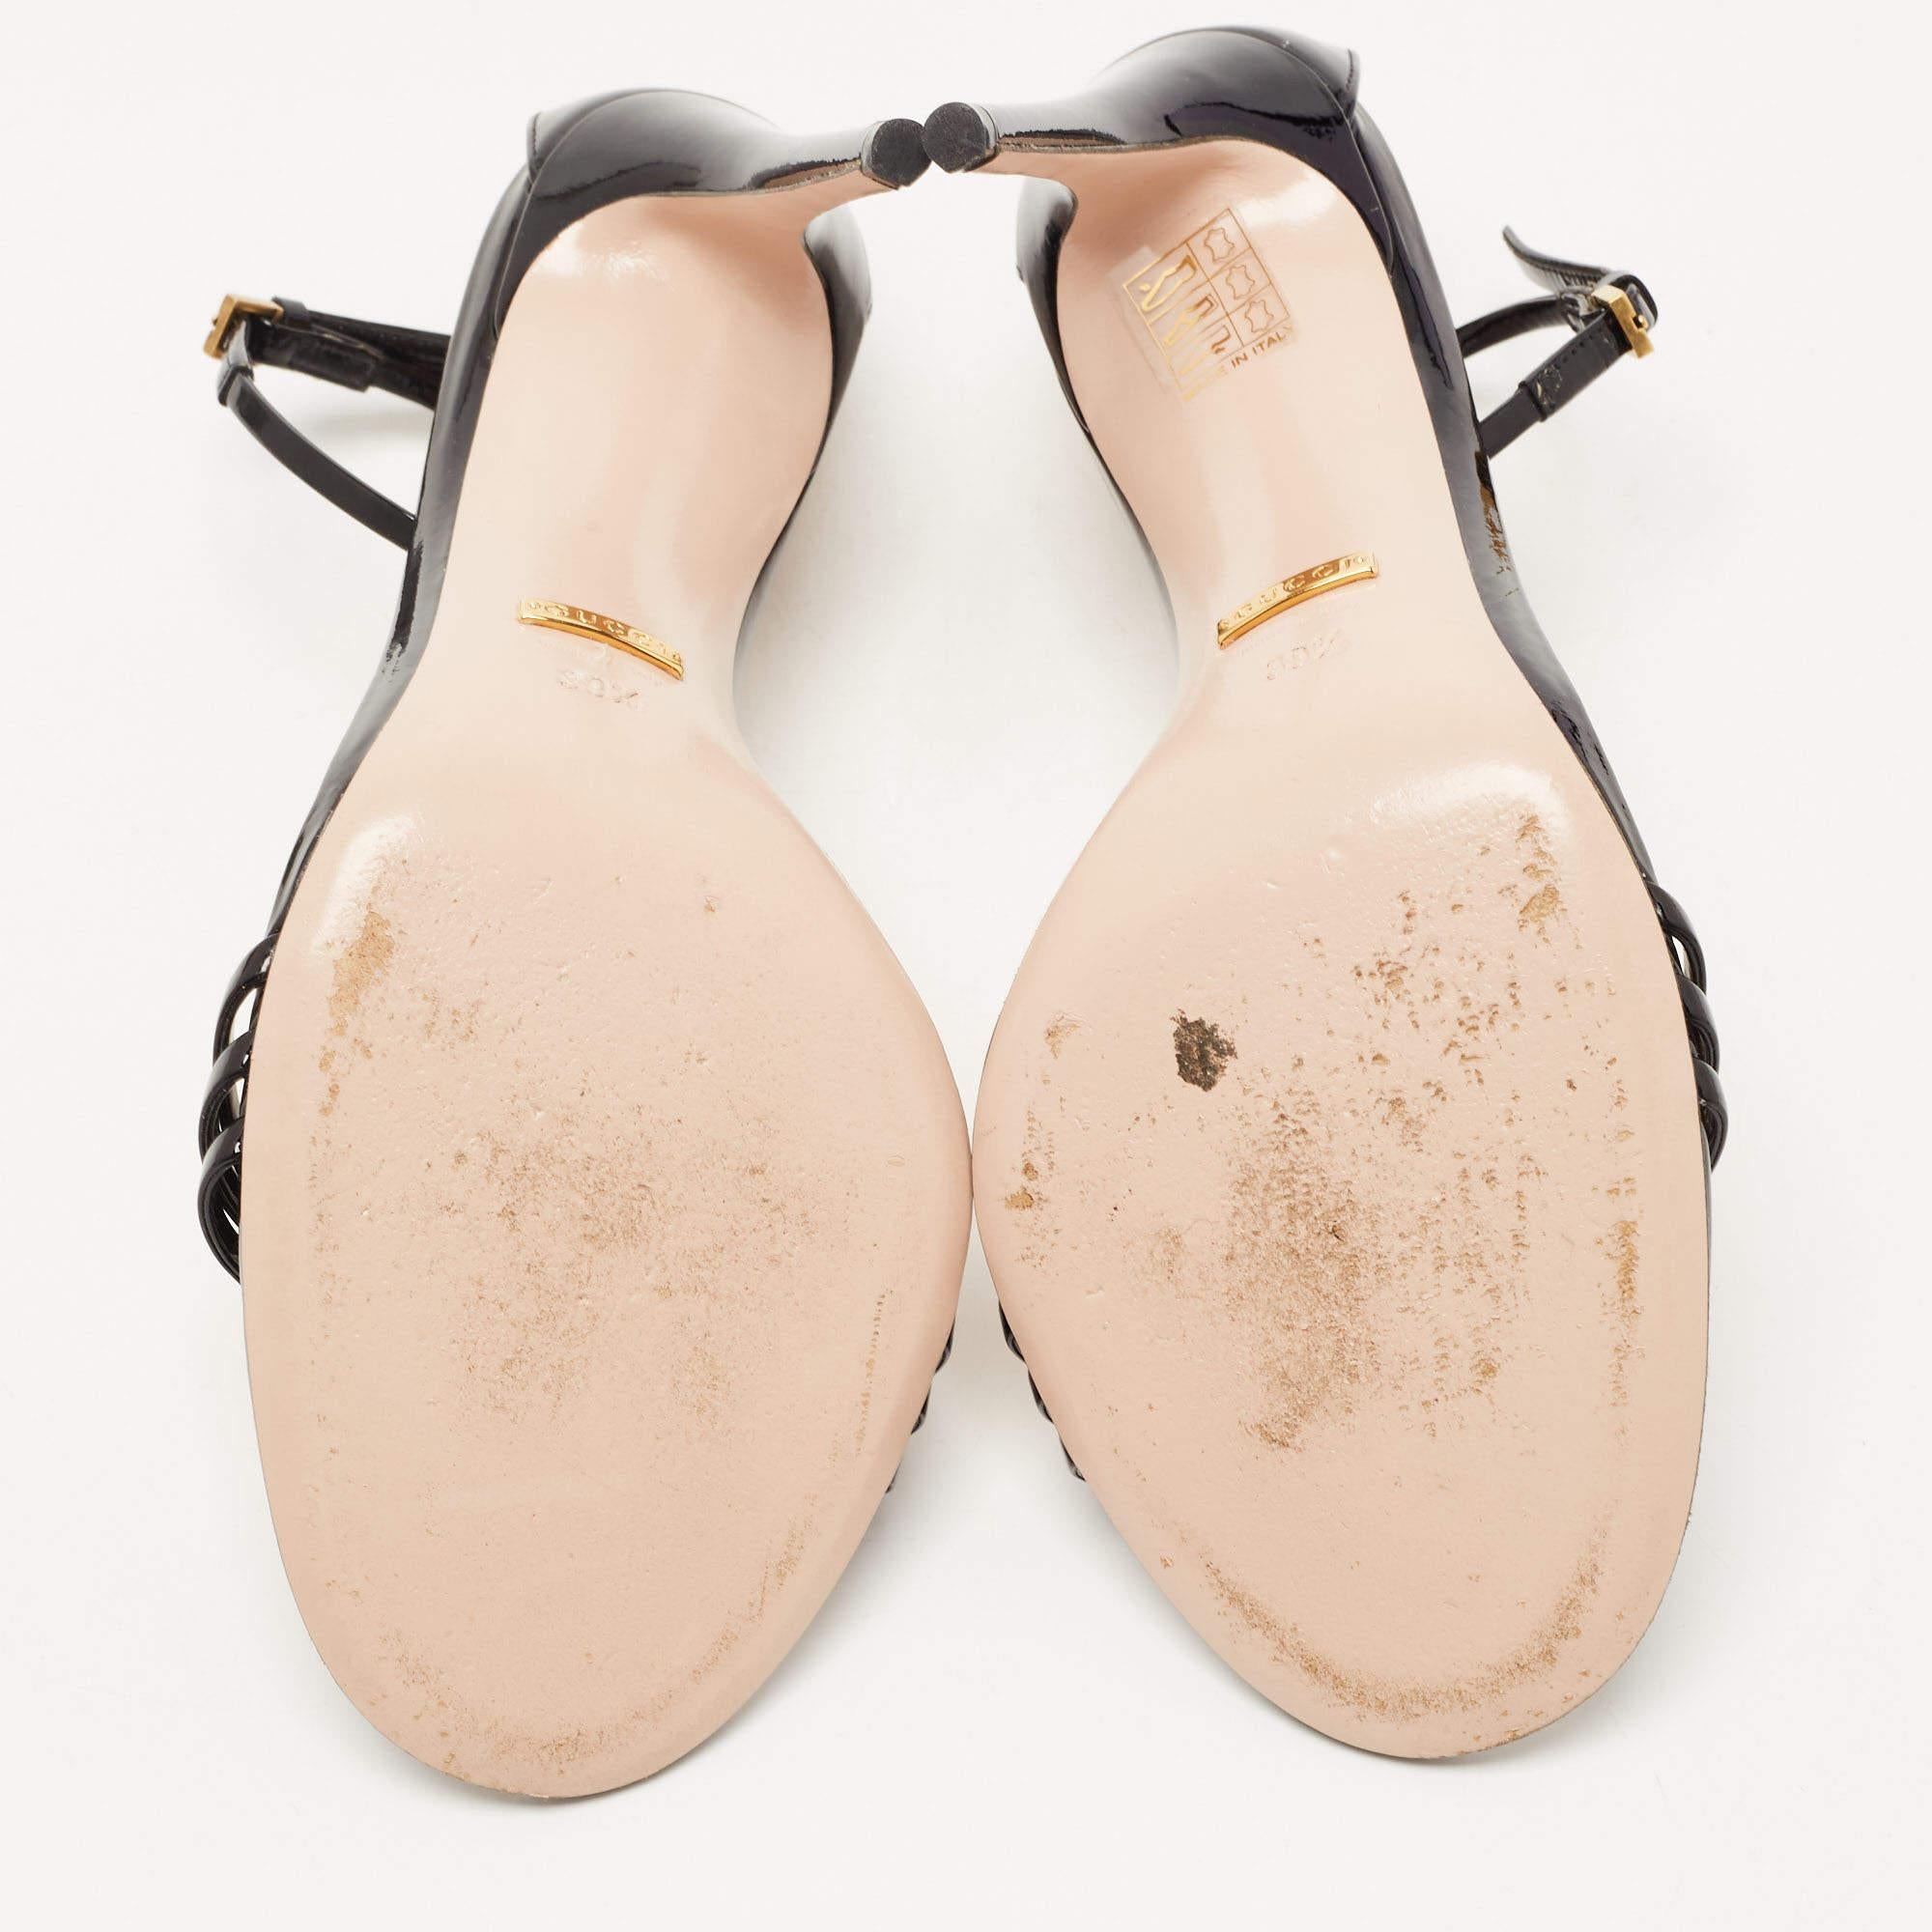 Gucci Black Patent Leather Ilse Ankle Strap Sandals Size 39.5 2